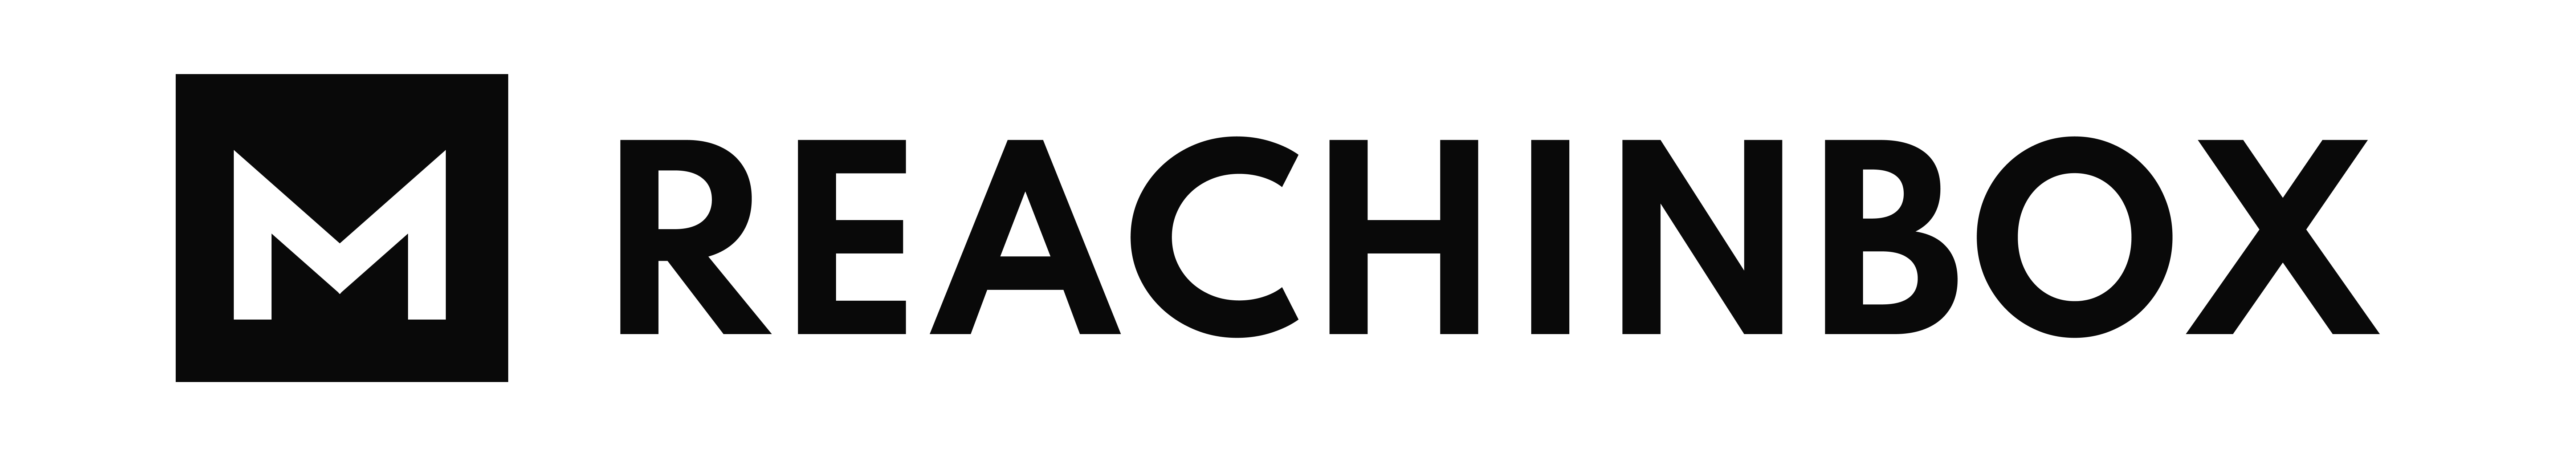 ReachInbox logo